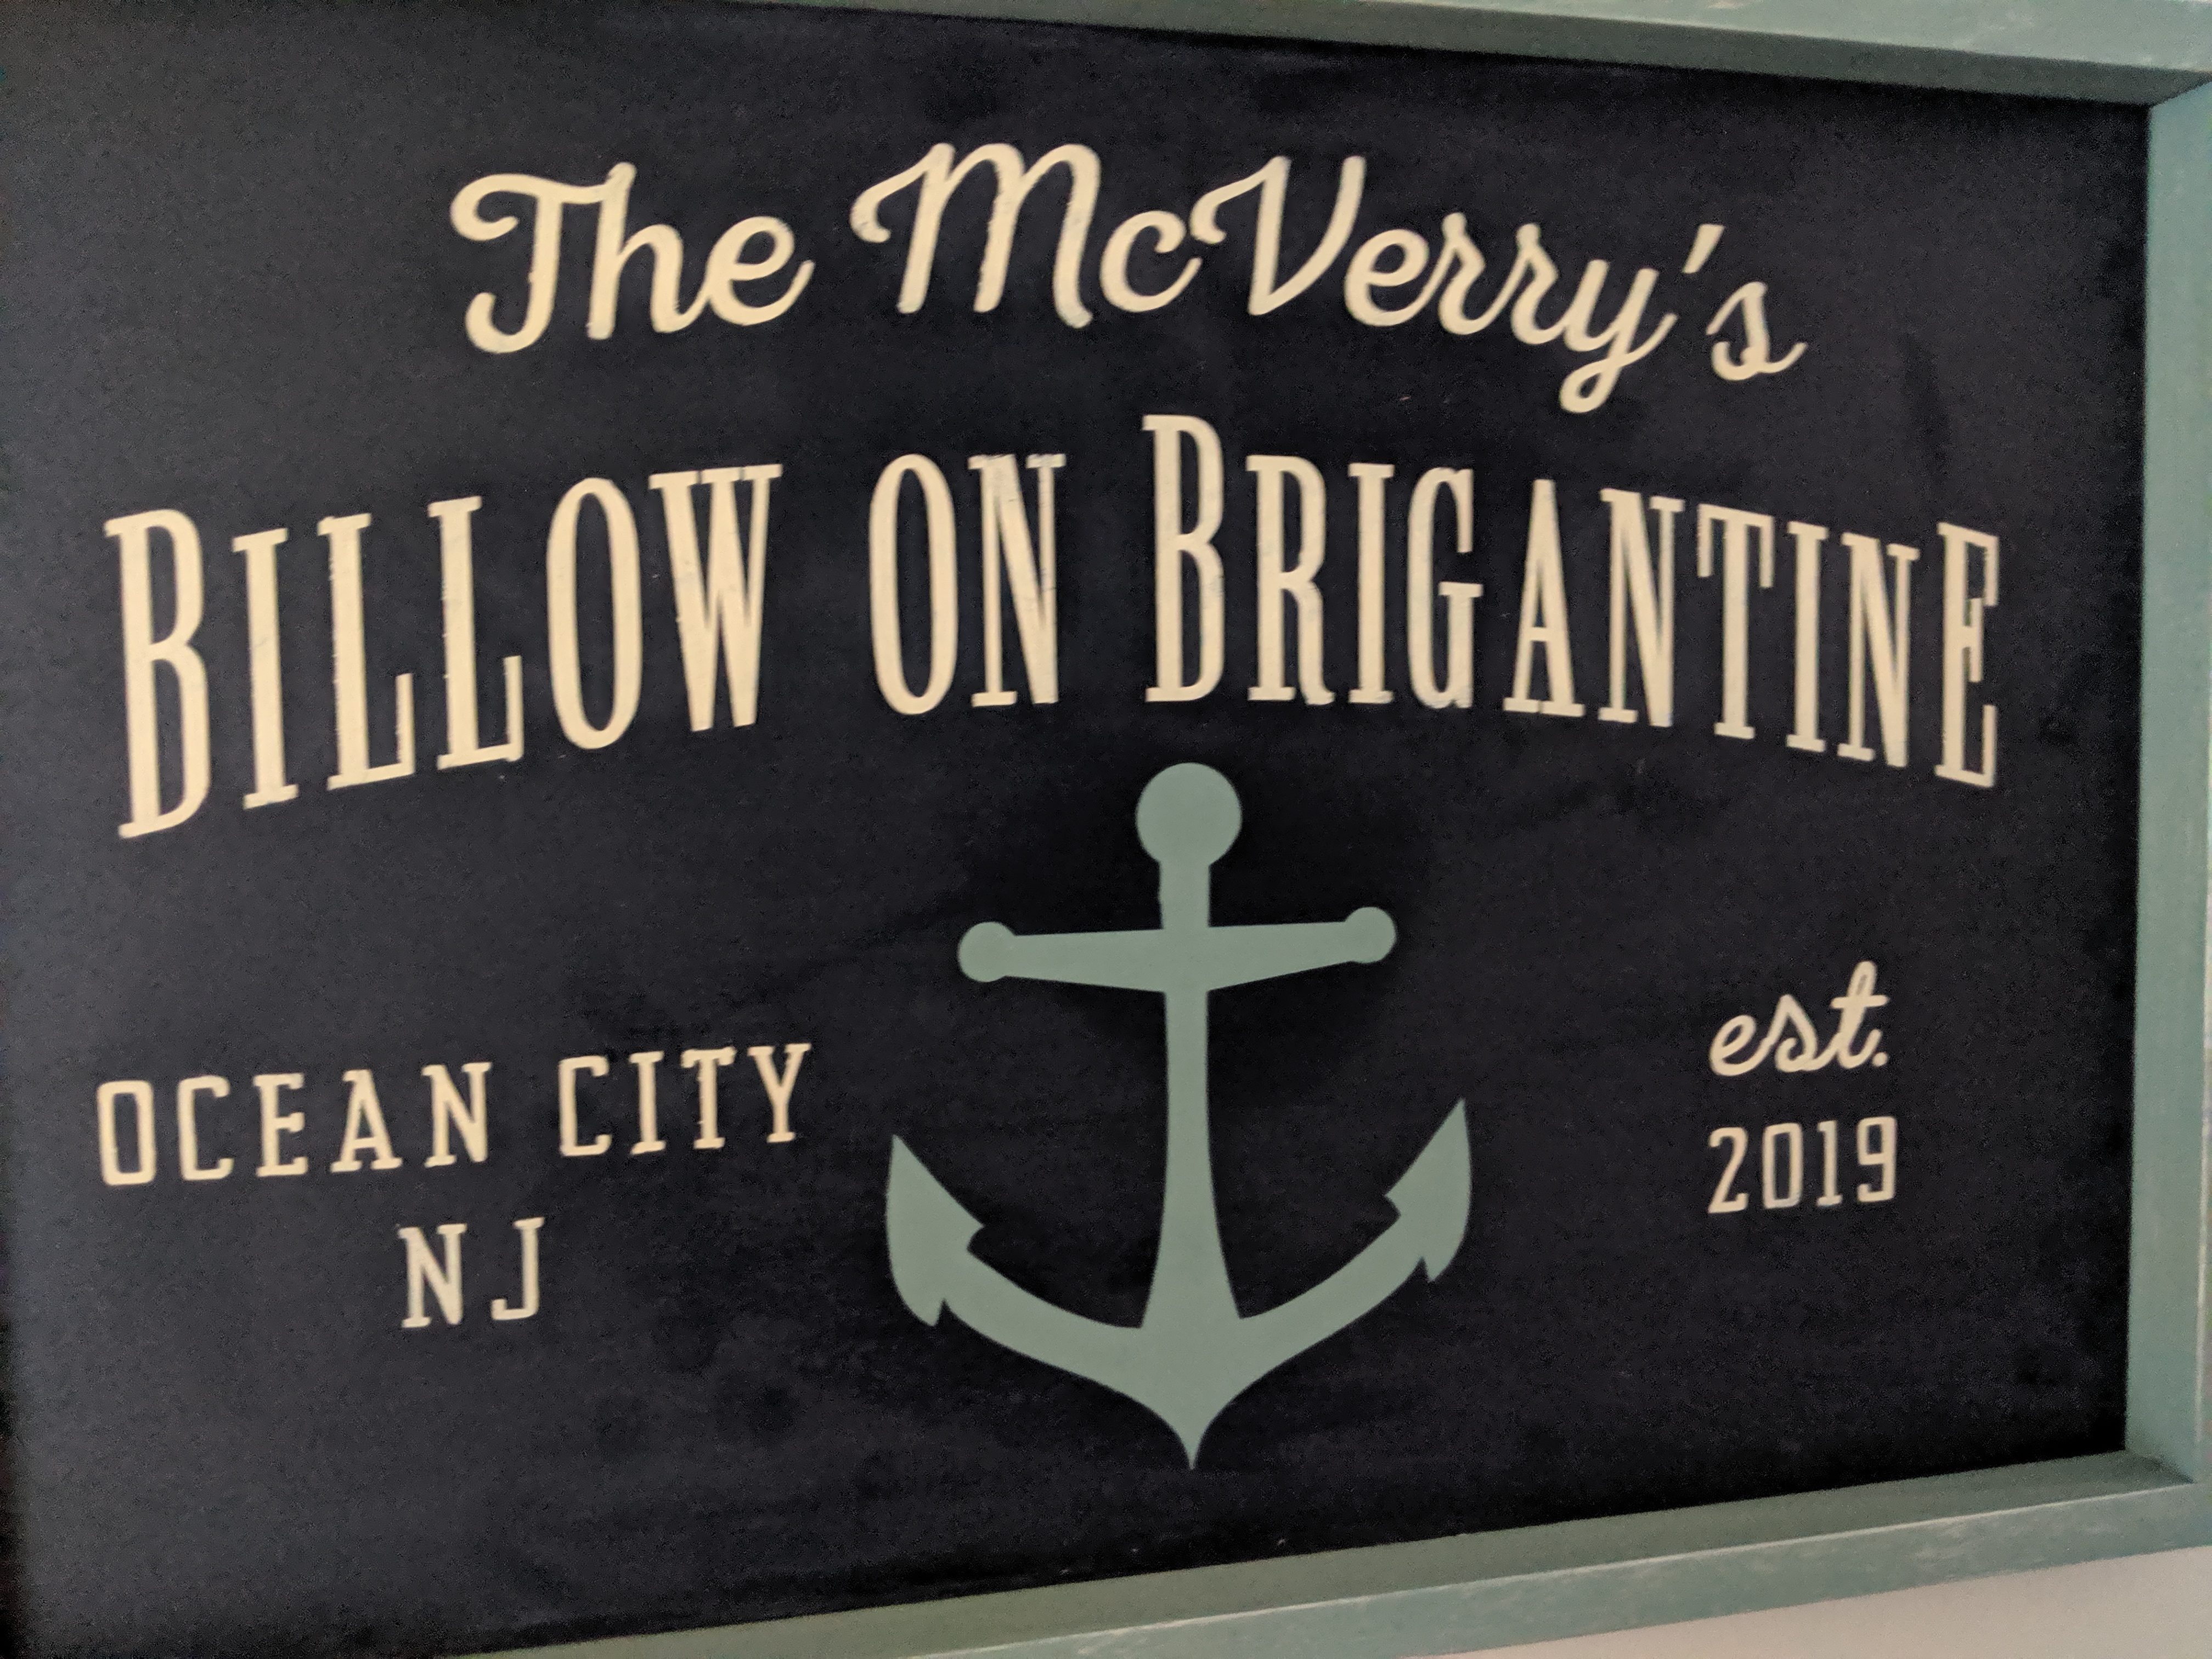 sign that Says McVerry on Brigatine established 2018